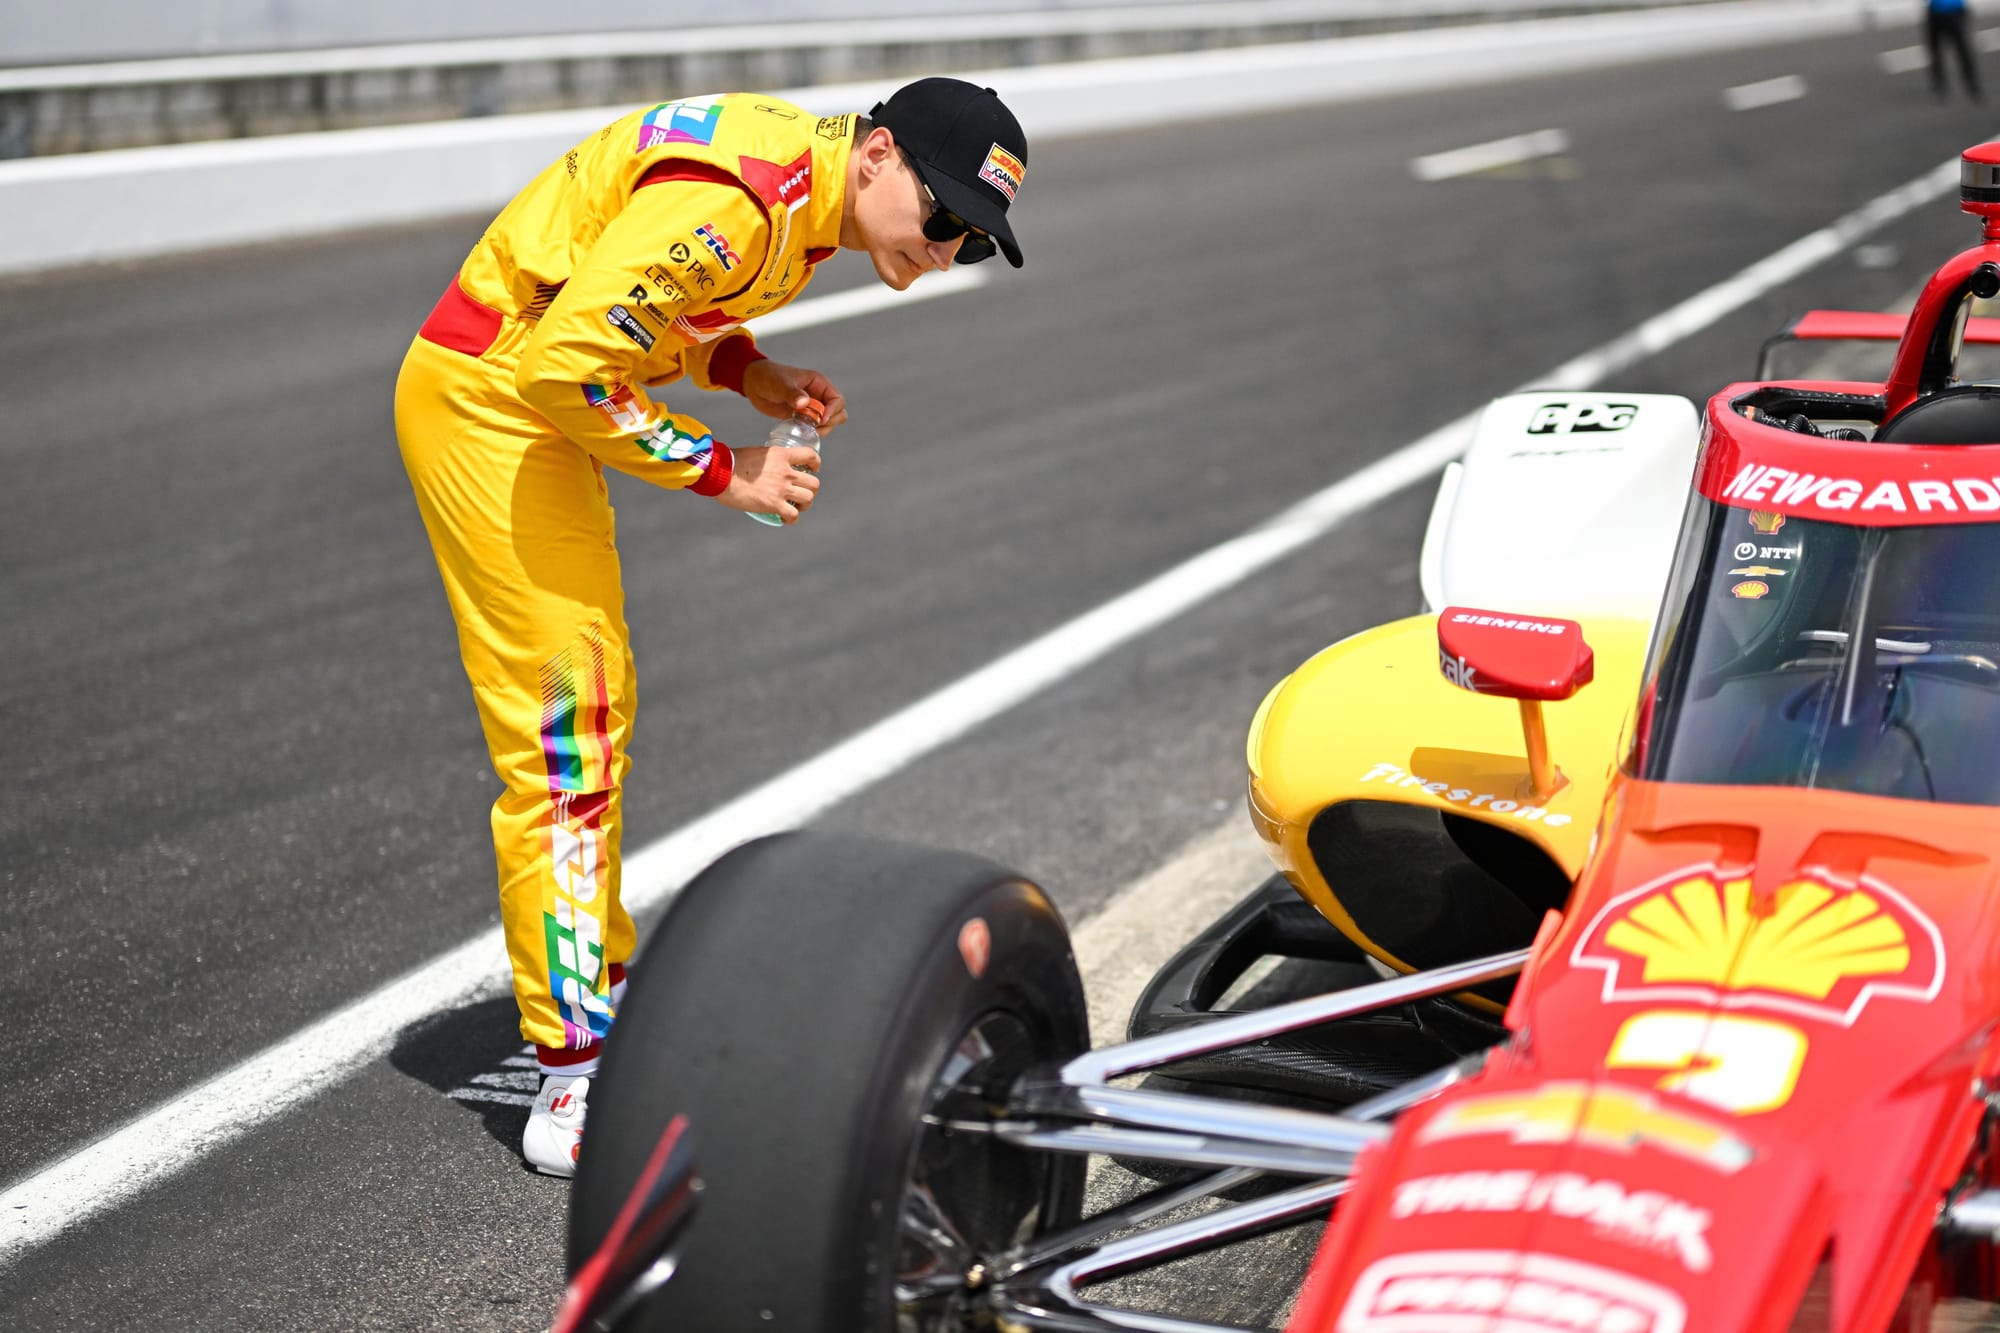 Alex Ballou looks at the IndyCar driven by Josef Newgarden